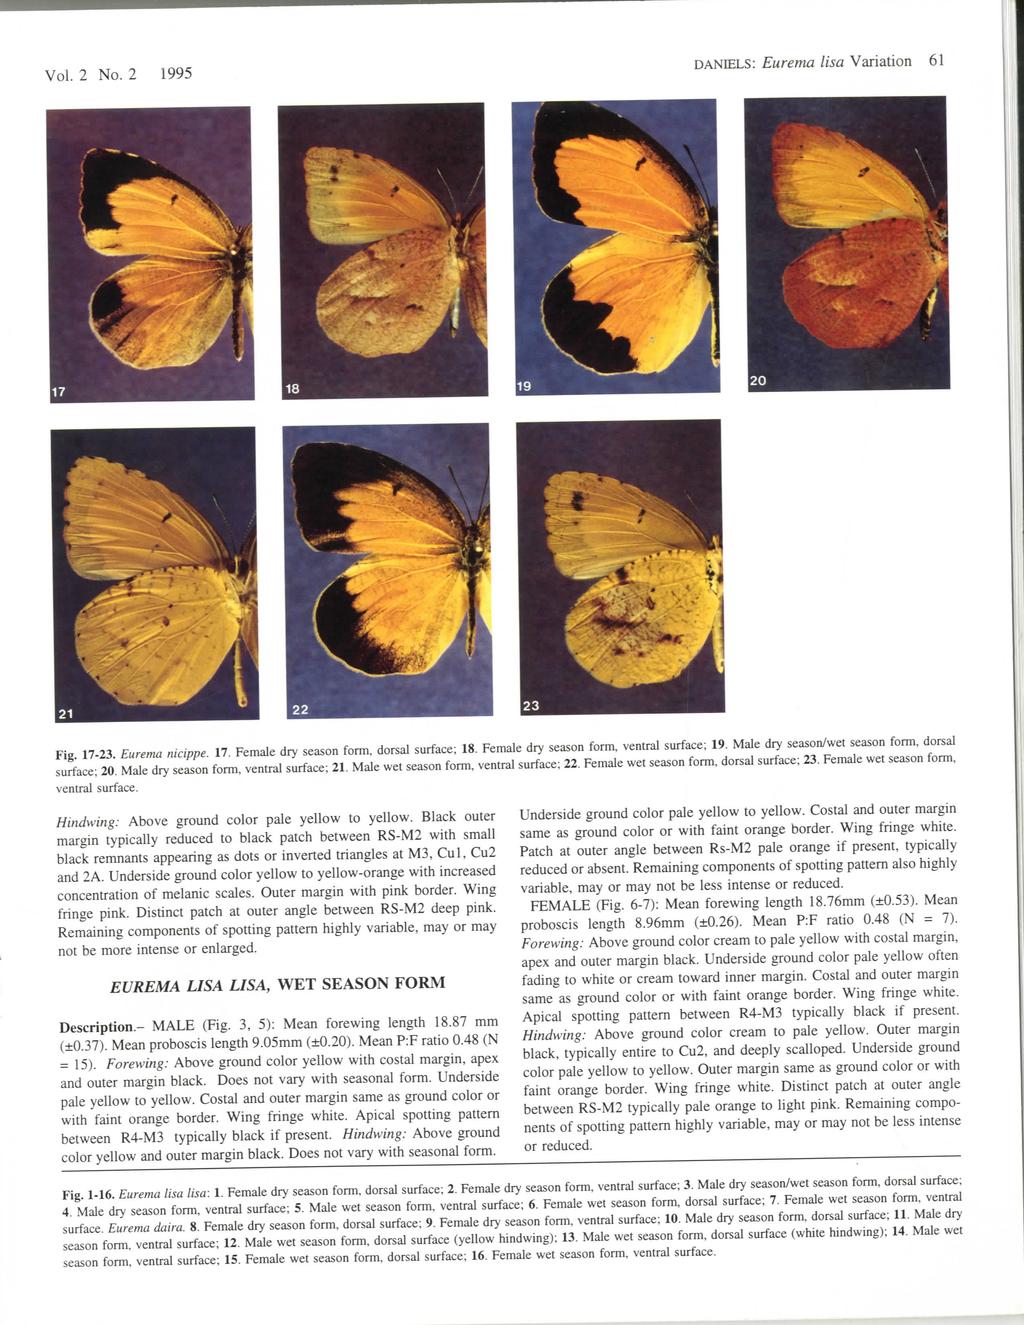 Vol. 2 No. 2 1995 DANIELS: Eurema lisa Variation 61 Fig. 17-23. Eurema nicippe. 17. Female dry season, dorsal surface; 18. Female dry season, ventral surface; 19.